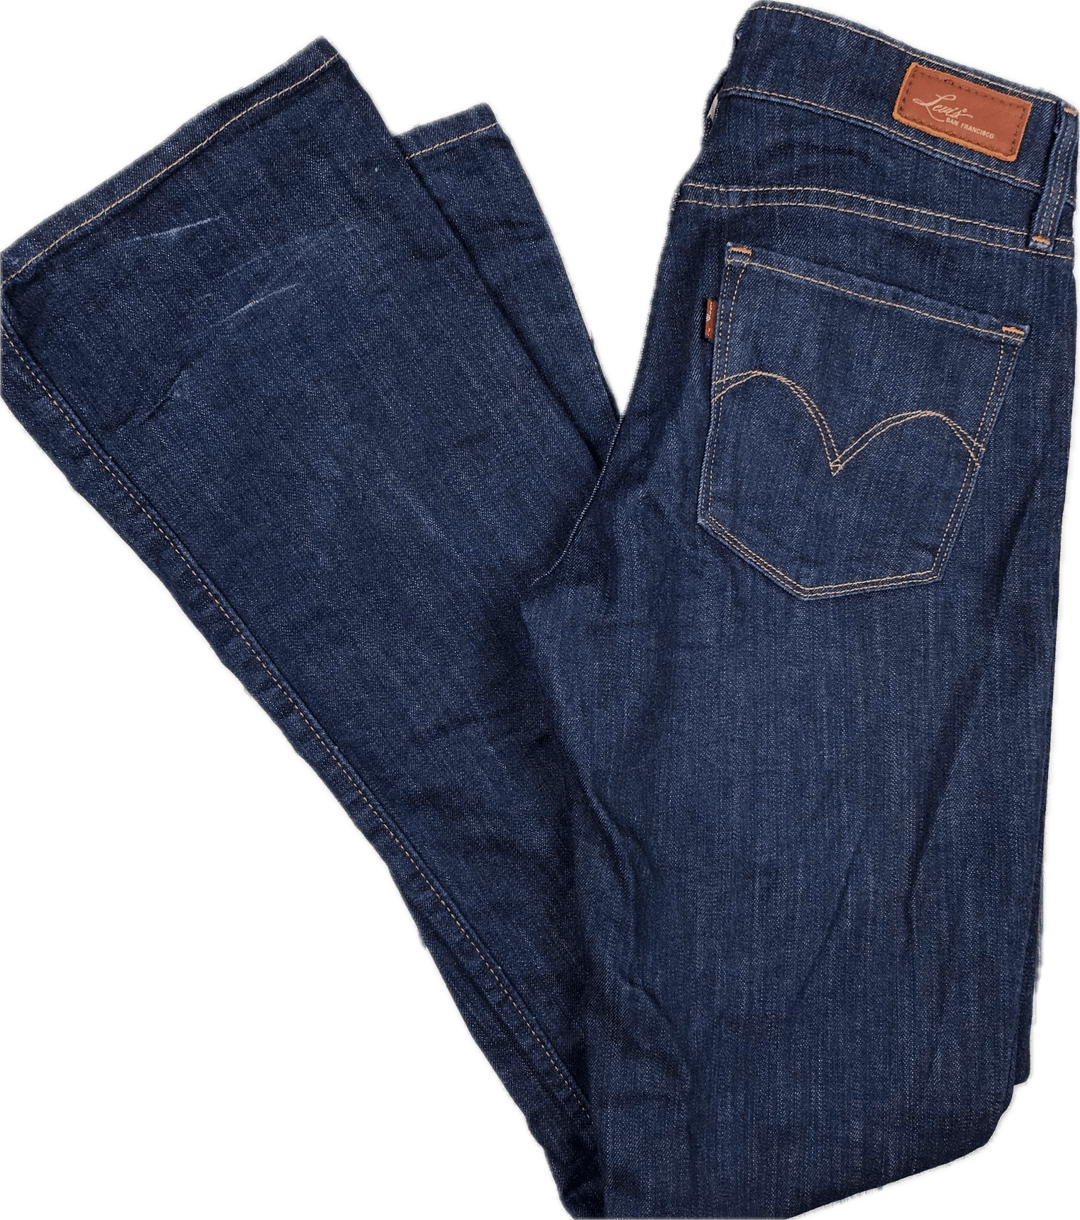 Levis Demi Curve Skinny Boot Jeans - Size 25 - Jean Pool